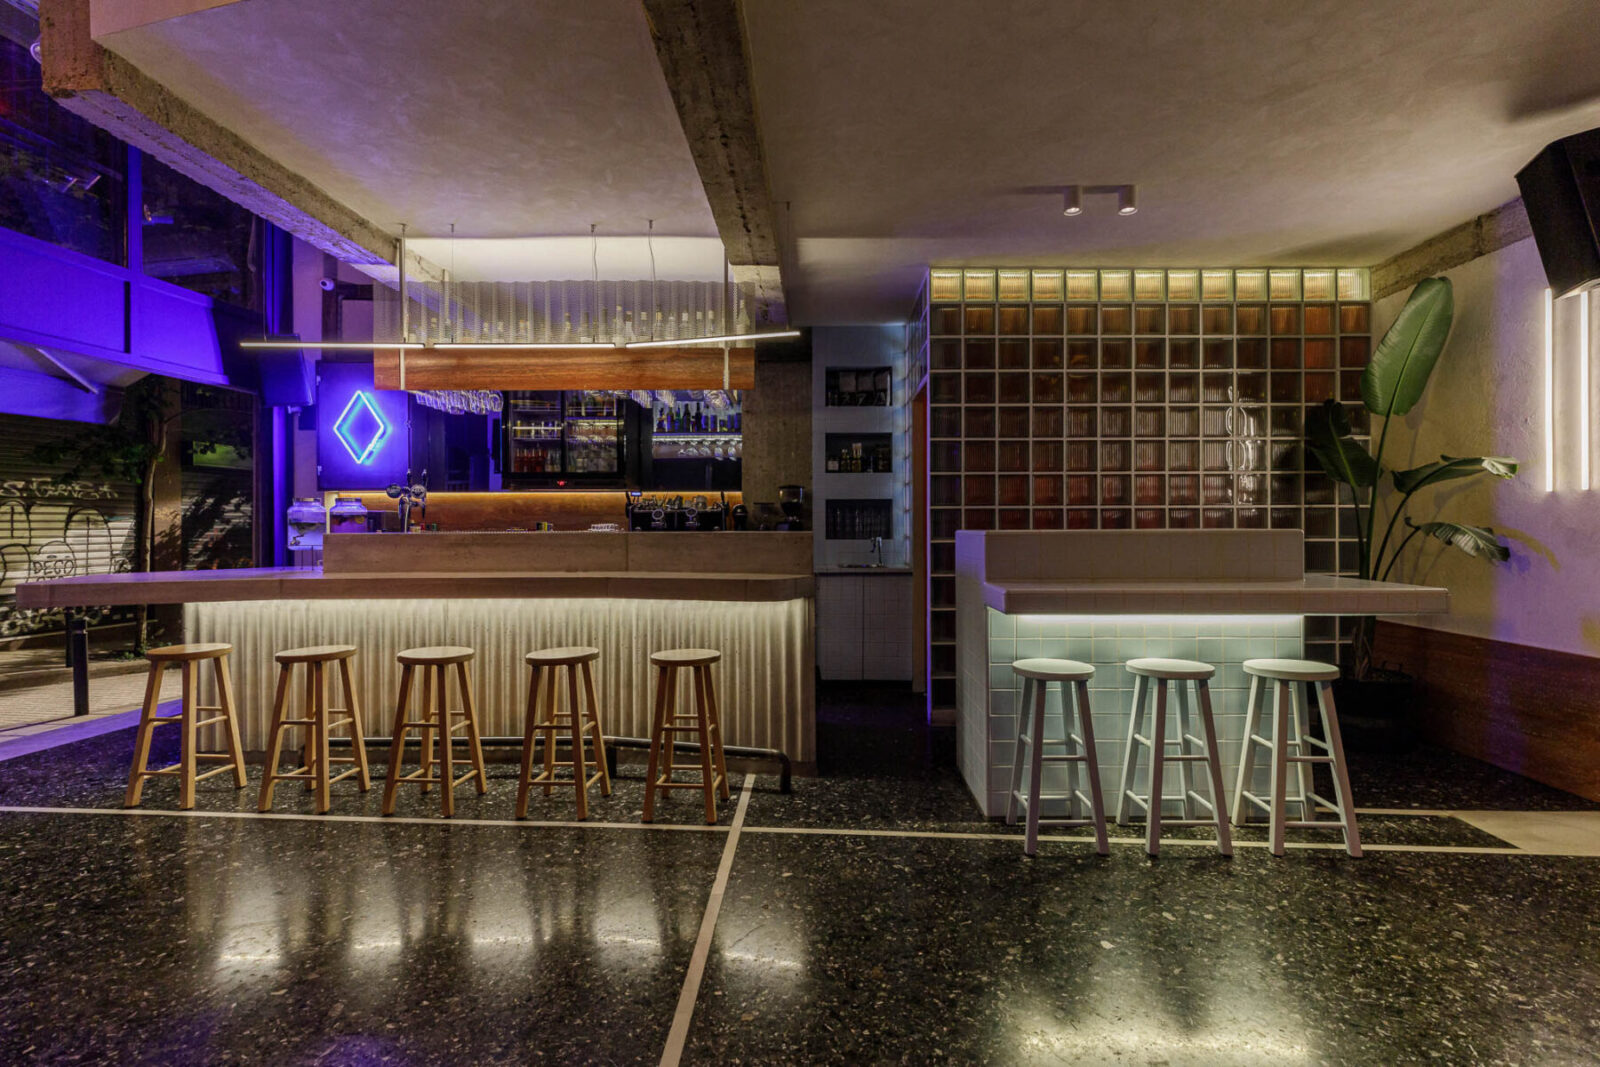 Archisearch Studio Aither designed Romantzo bar in Thessaloniki